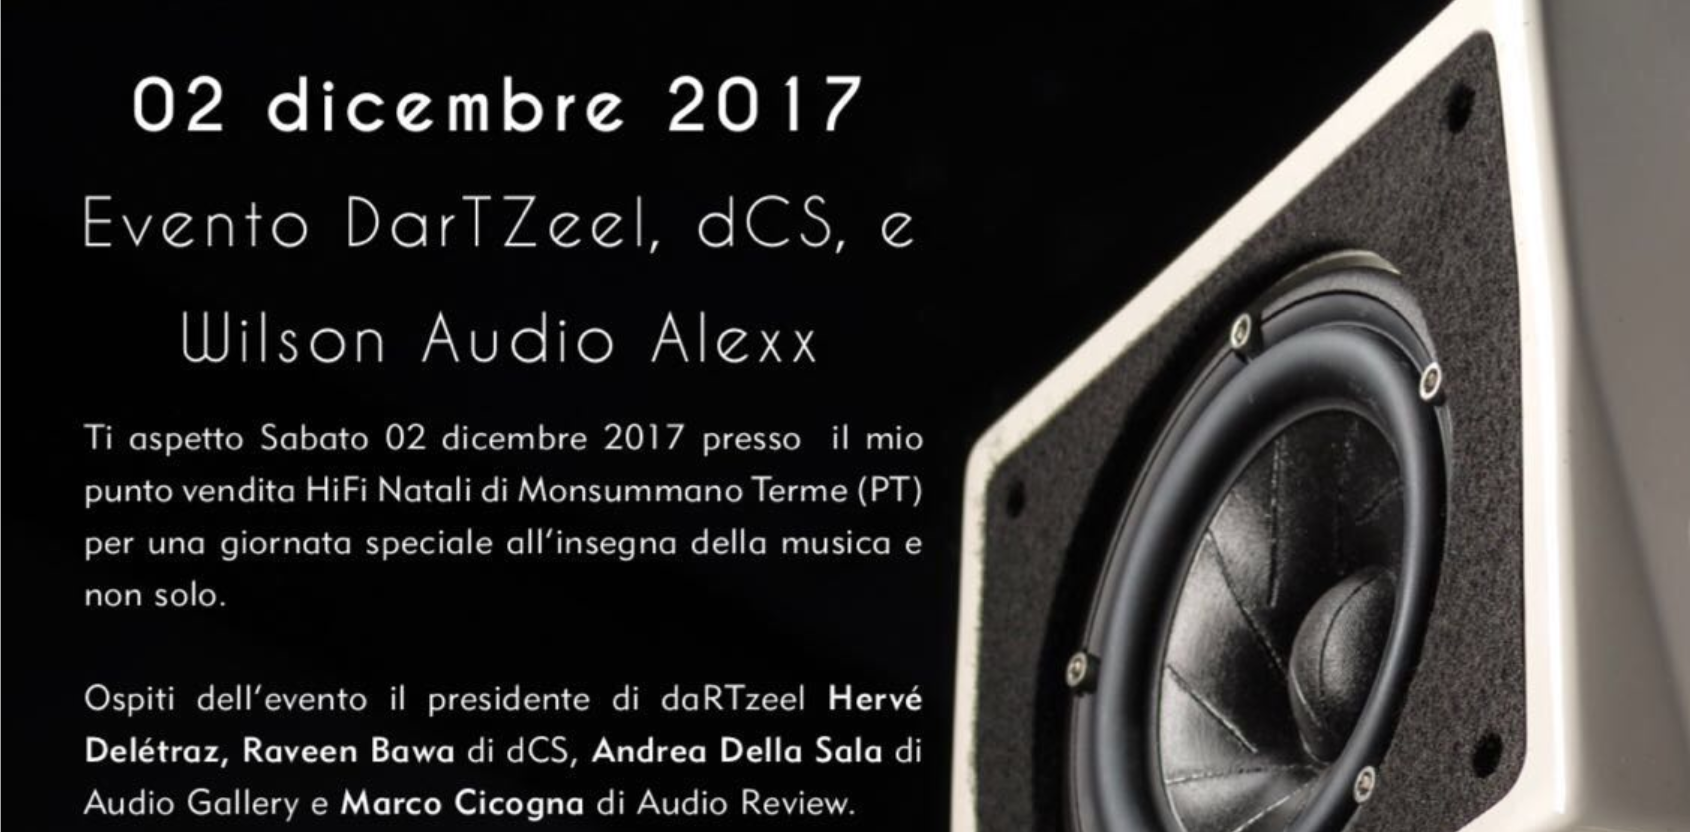 Evento DarTZeel – DCS & Wilson Audio Alexx – 02 dicembre 2017